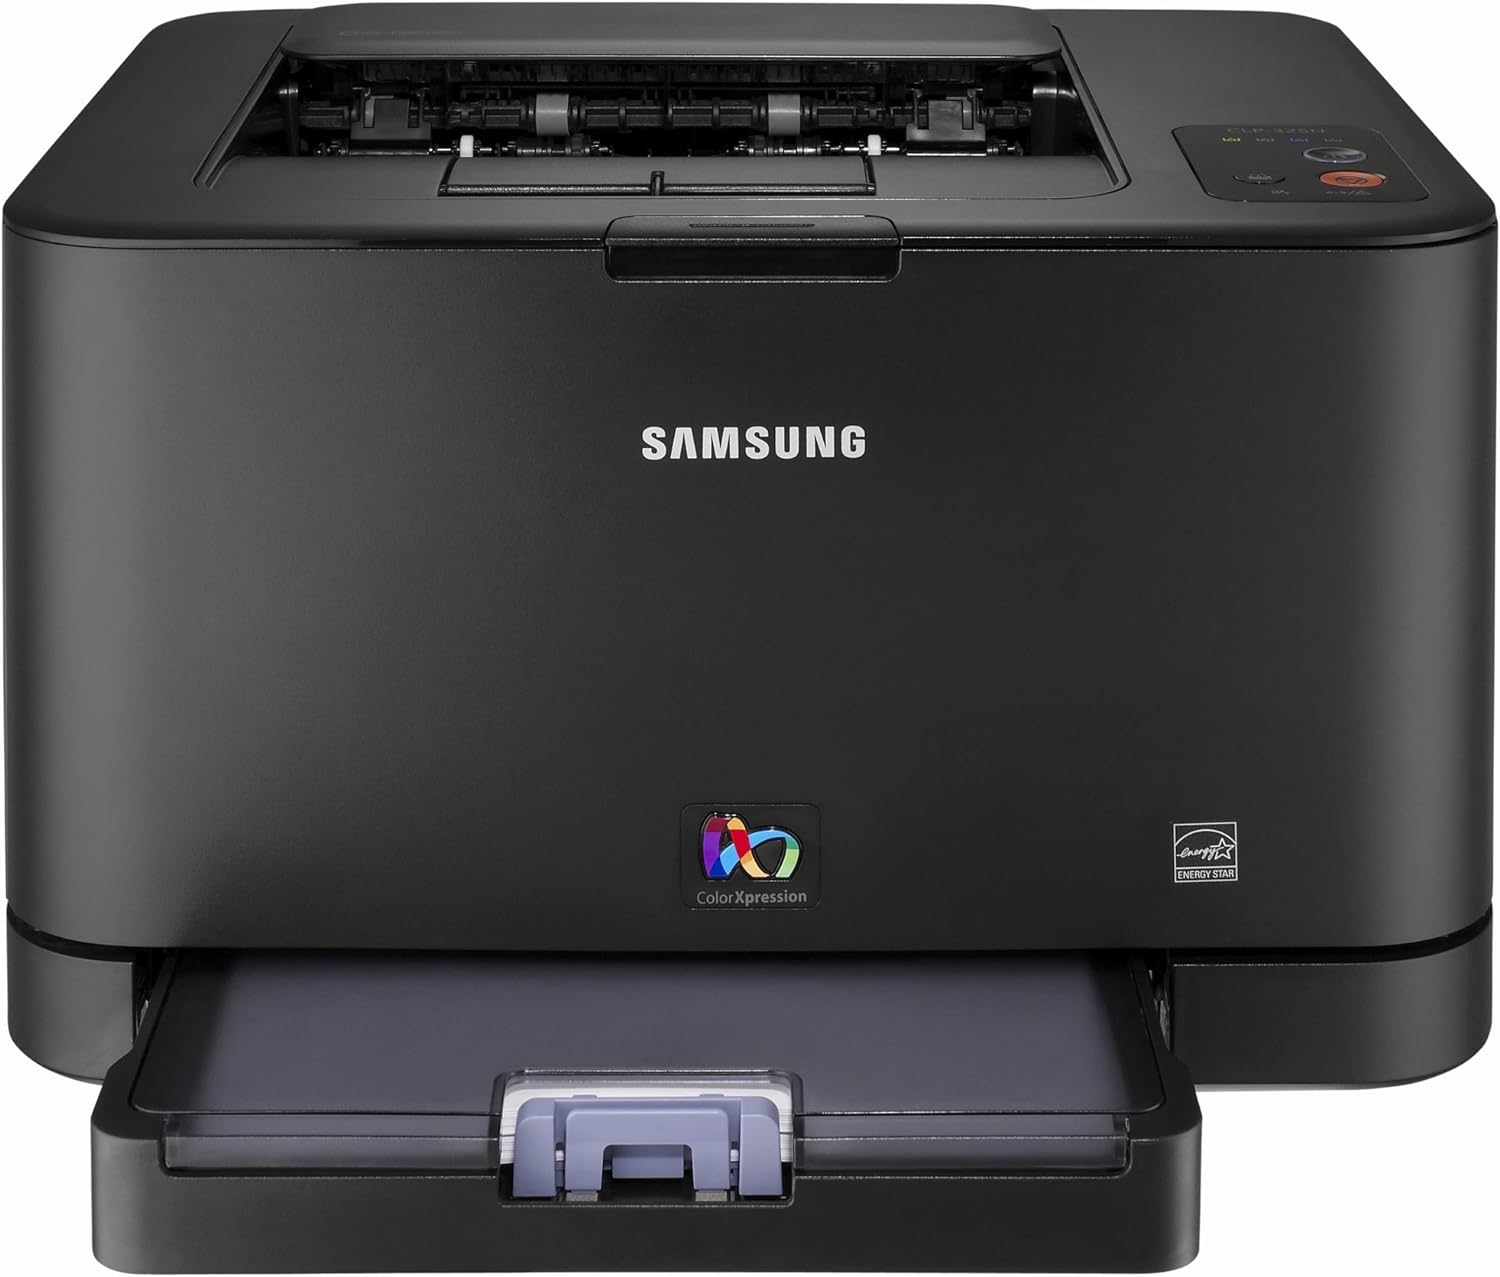 Samsung CLP-325W Color Laser Printer - Samsung Parts USA